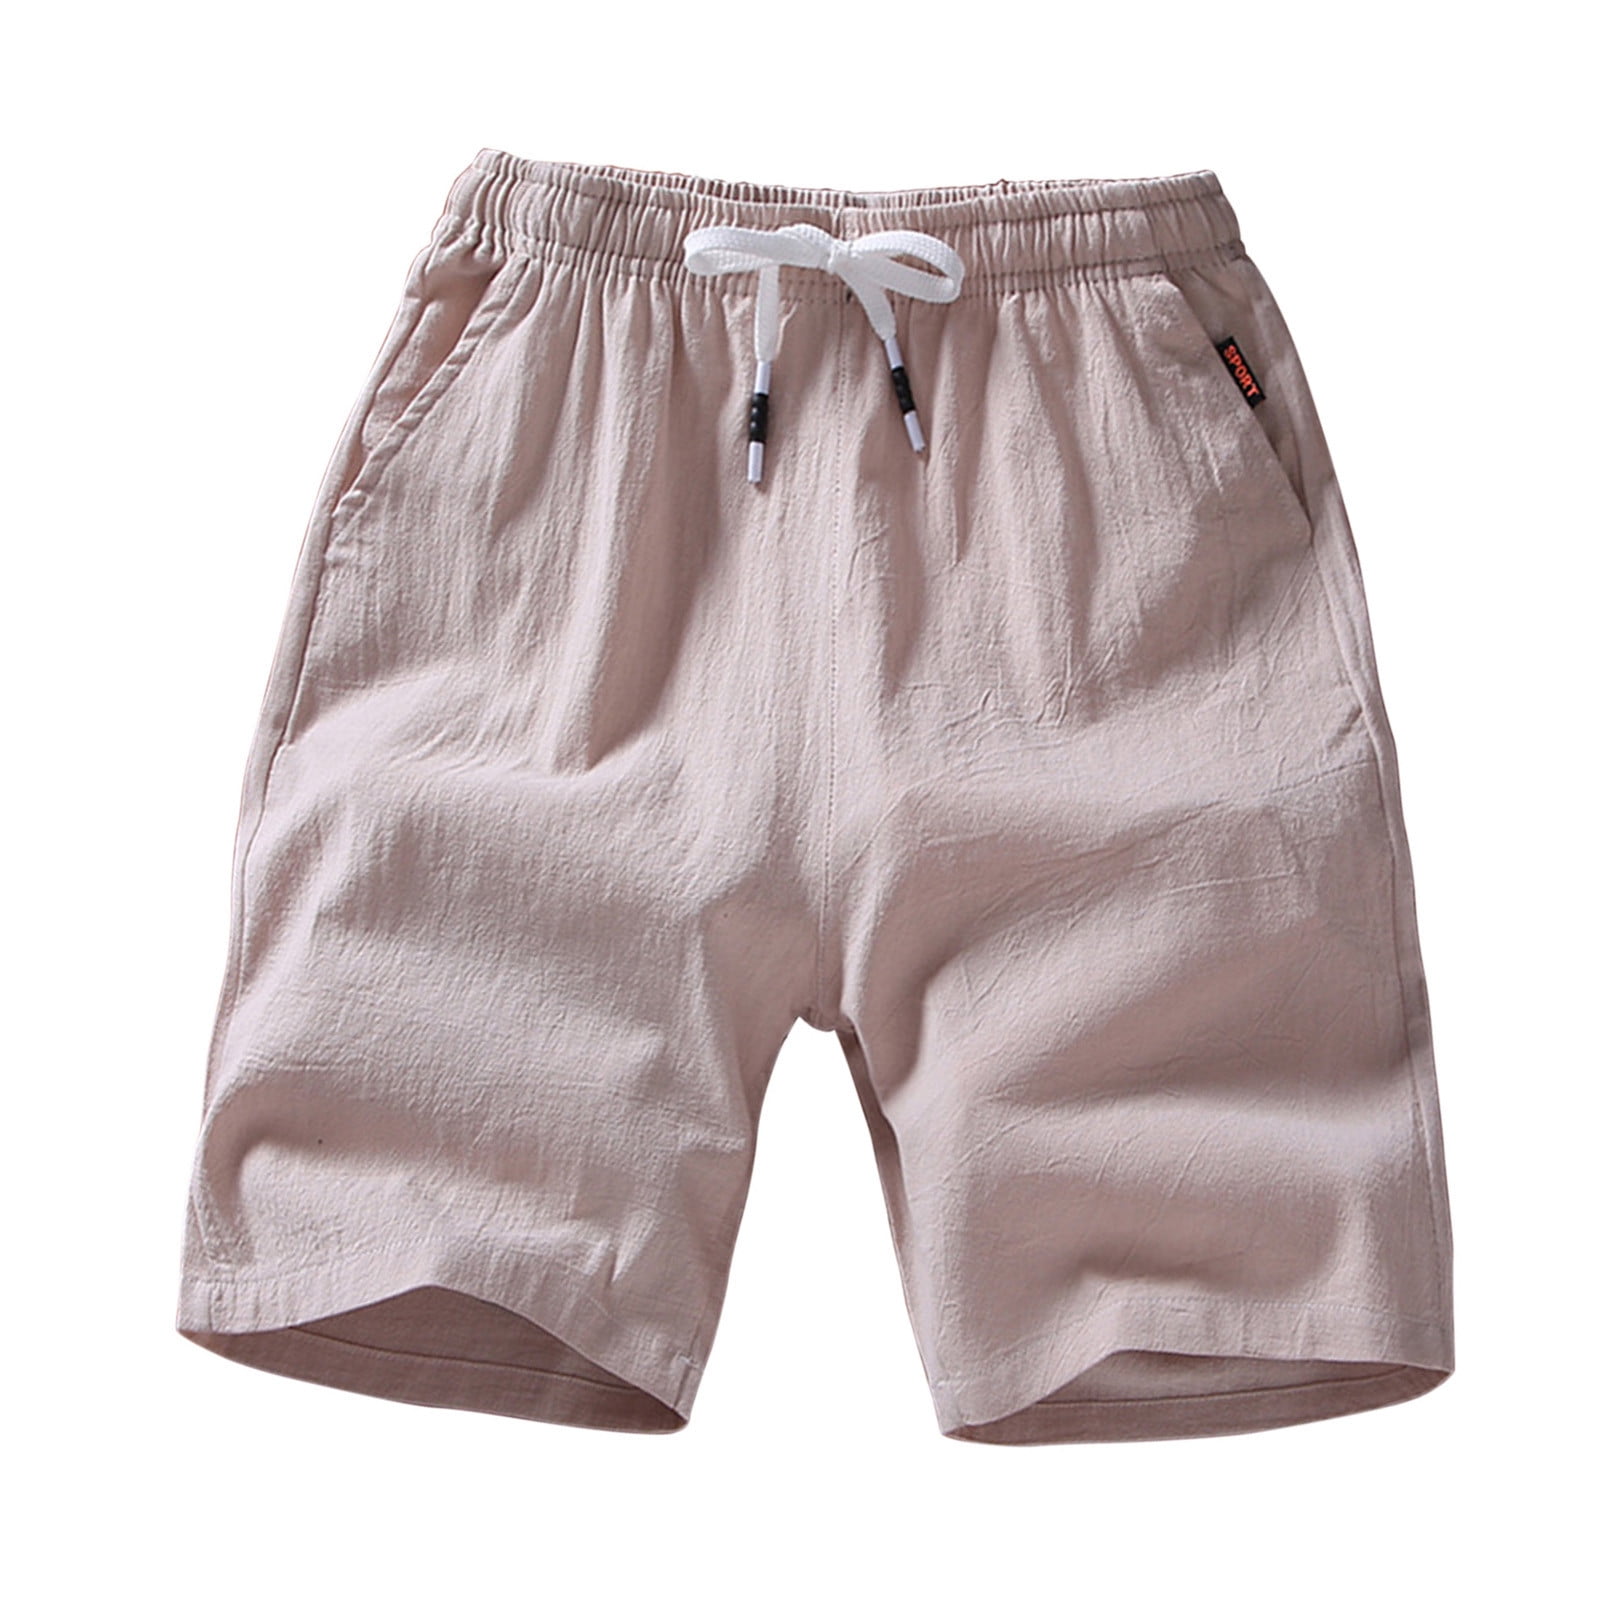 Fashion Men's Casual Shorts Summer Cotton Short Pants Trousers Sweat Beach 